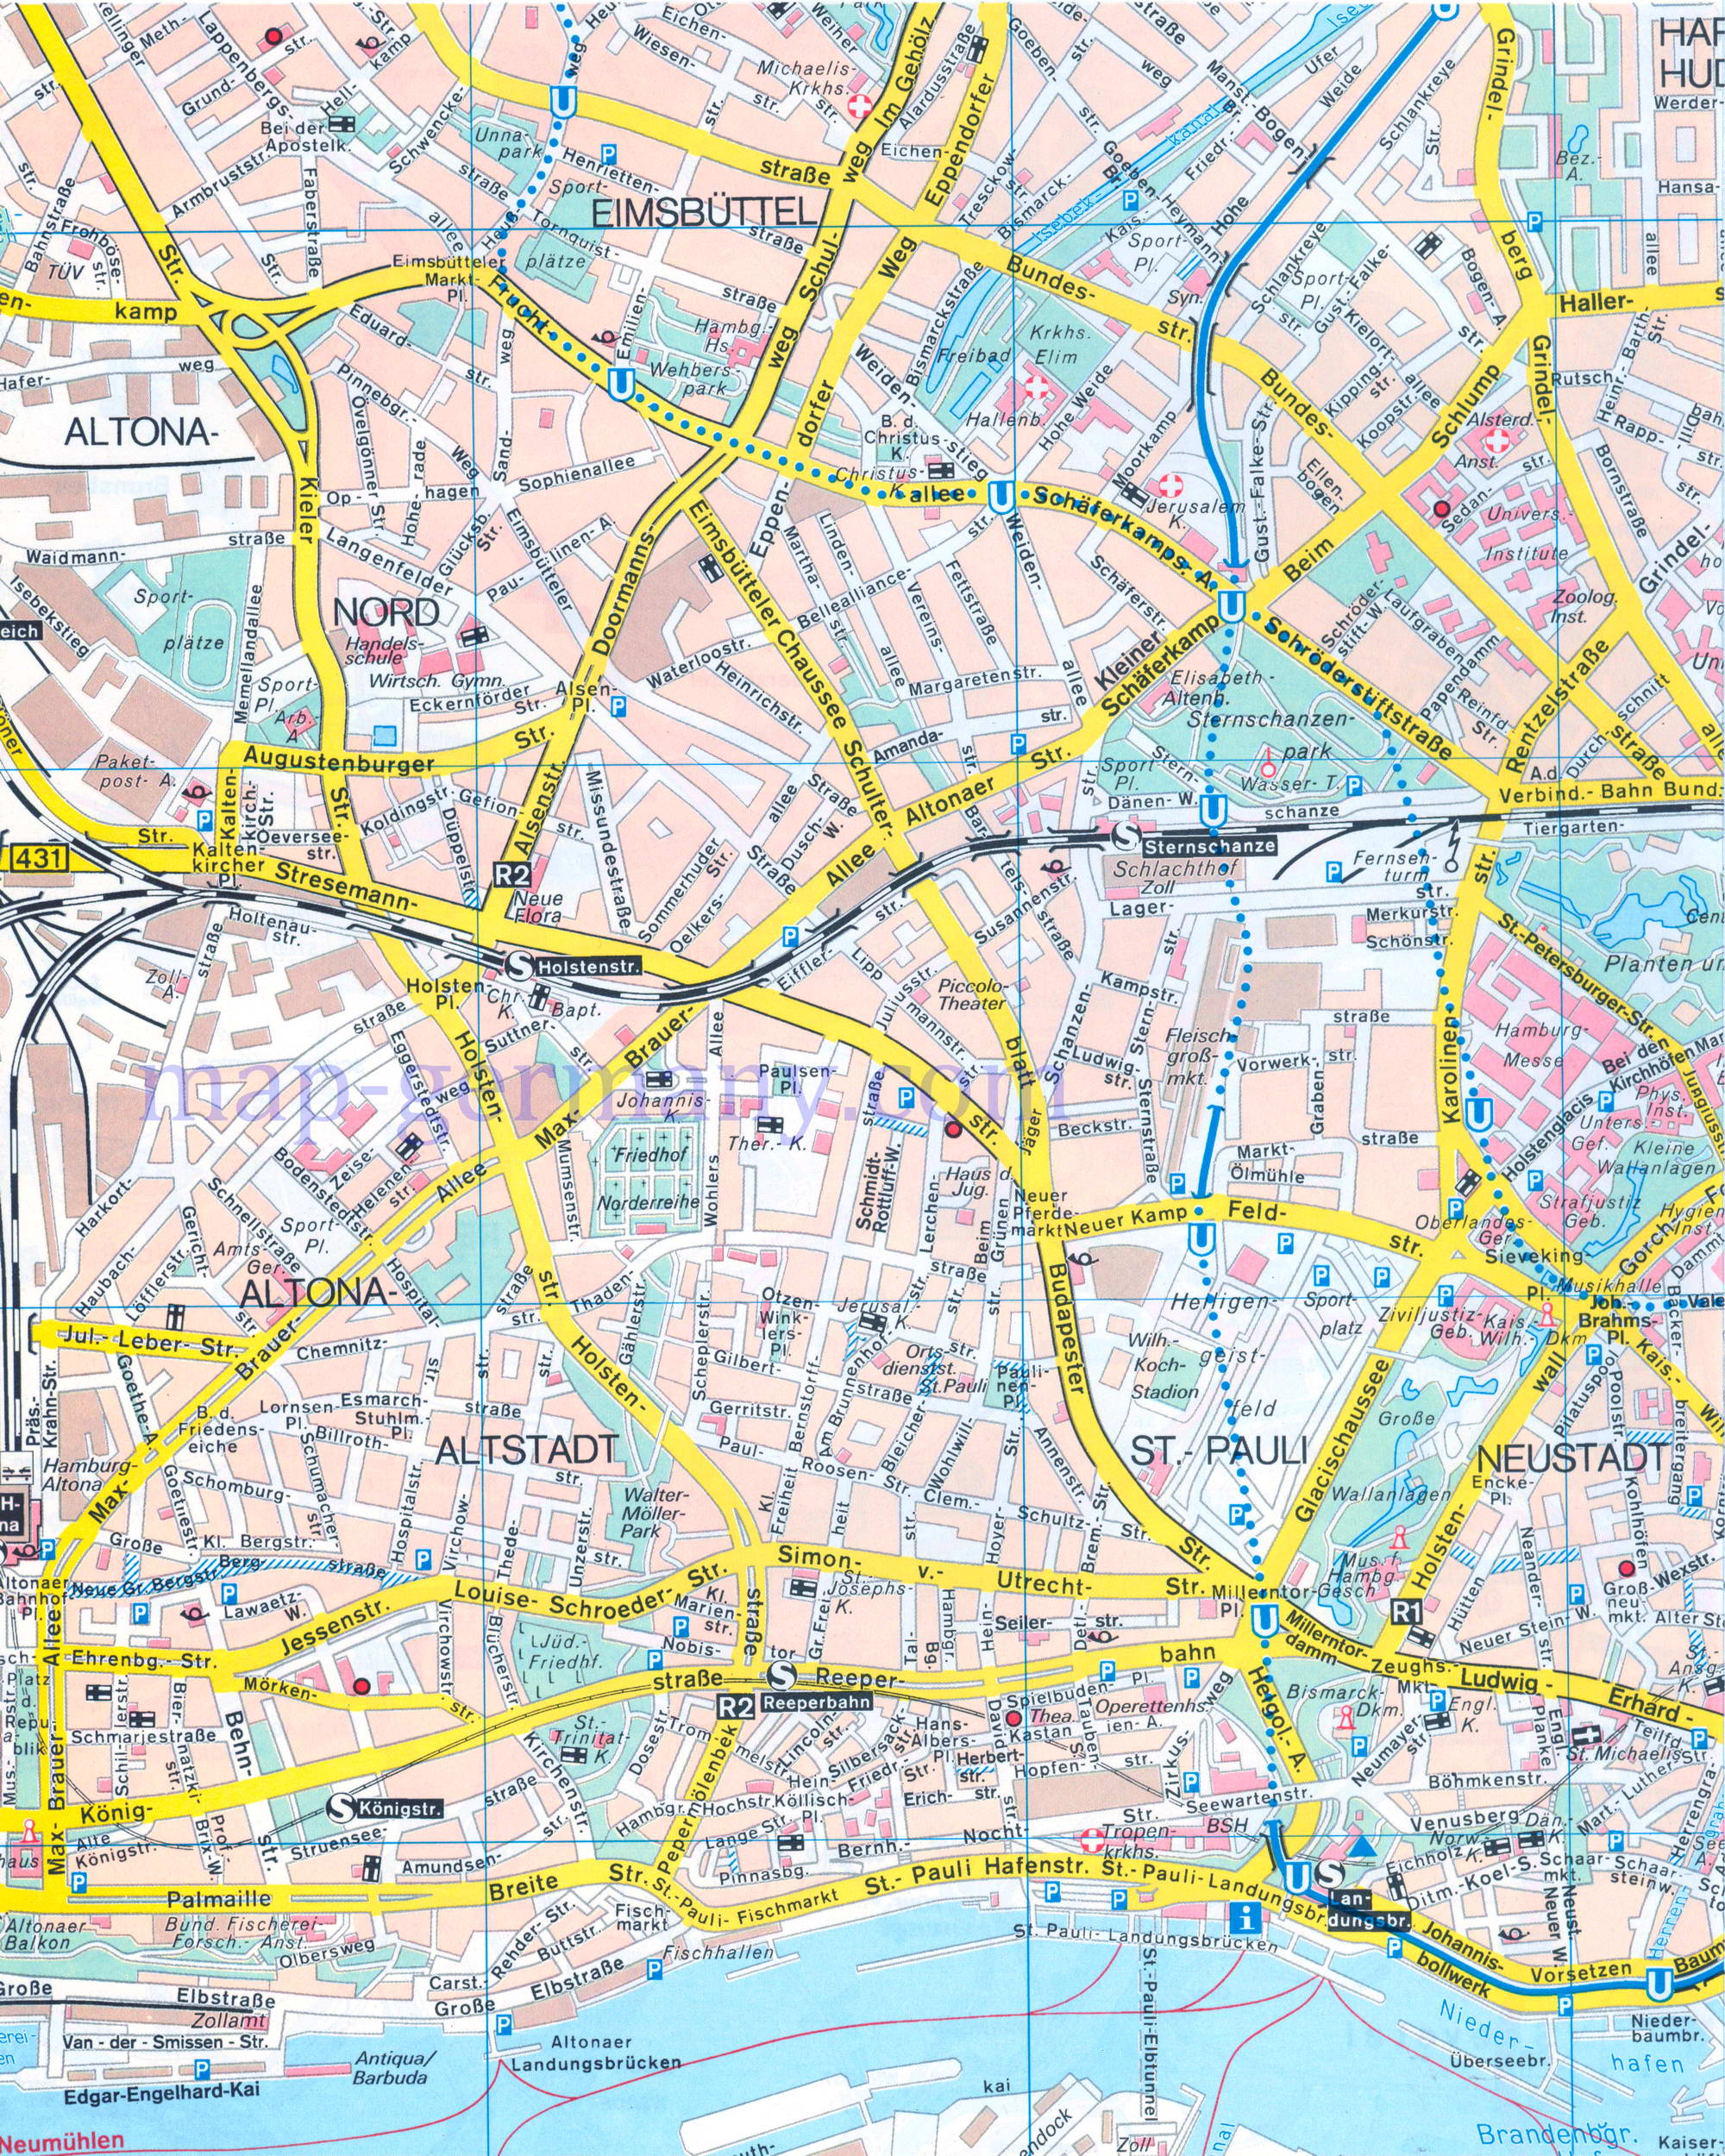 Карта улиц Гамбурга. Подробная карта улиц города Гамбург, A0 - 